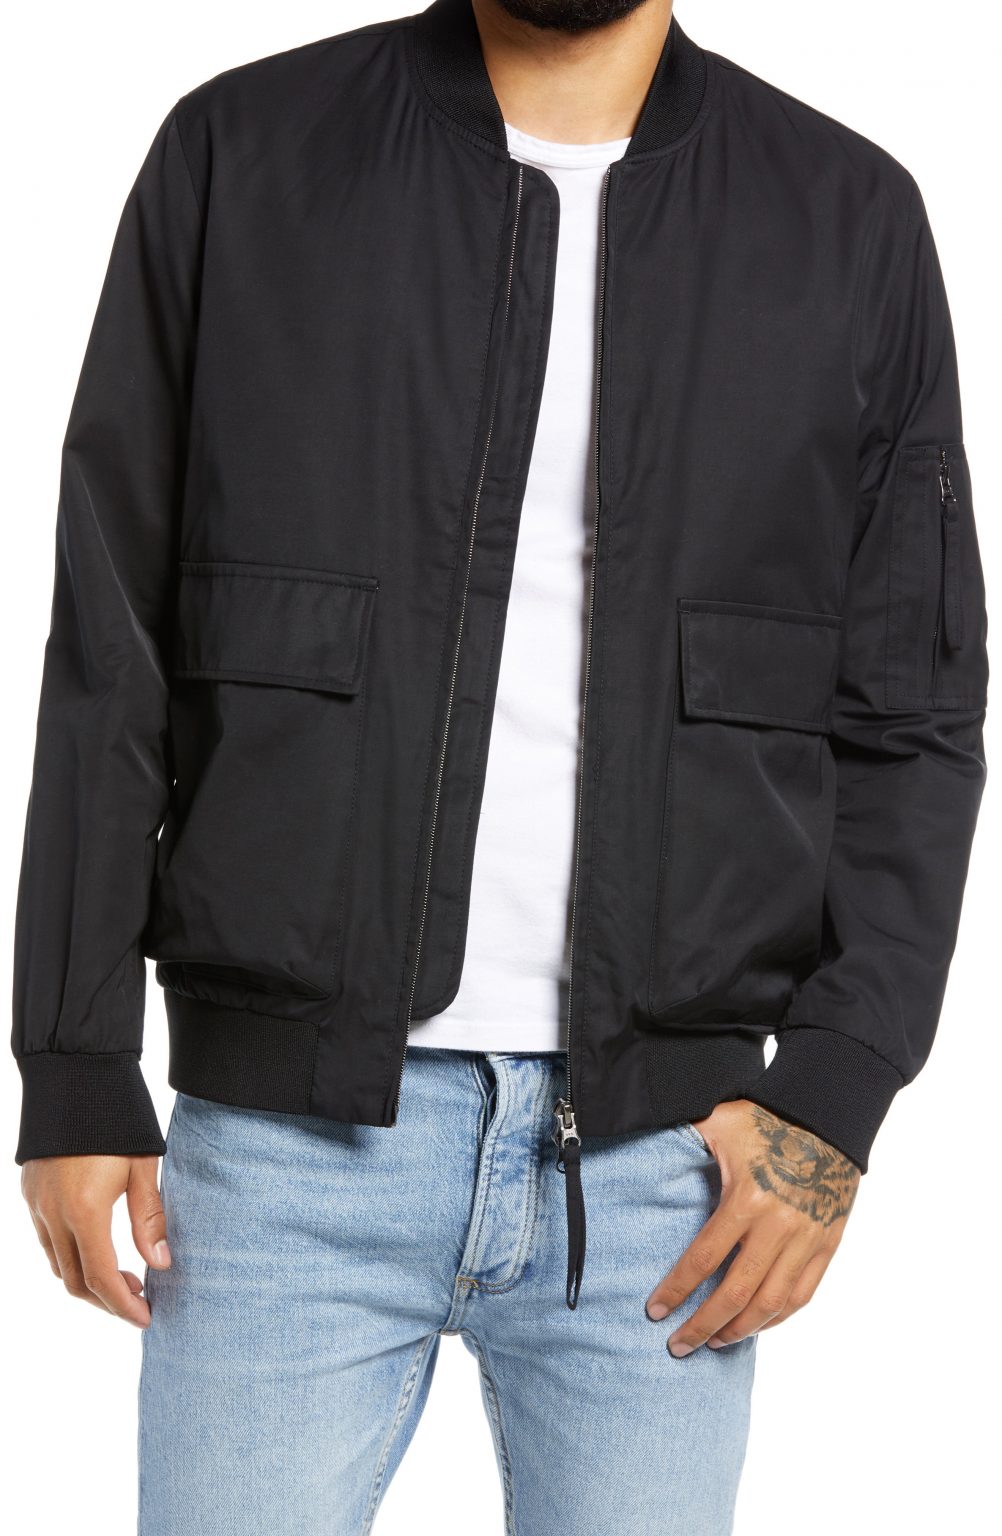 Men’s Topman Wilt Bomber Jacket, Size Large - Black | The Fashionisto